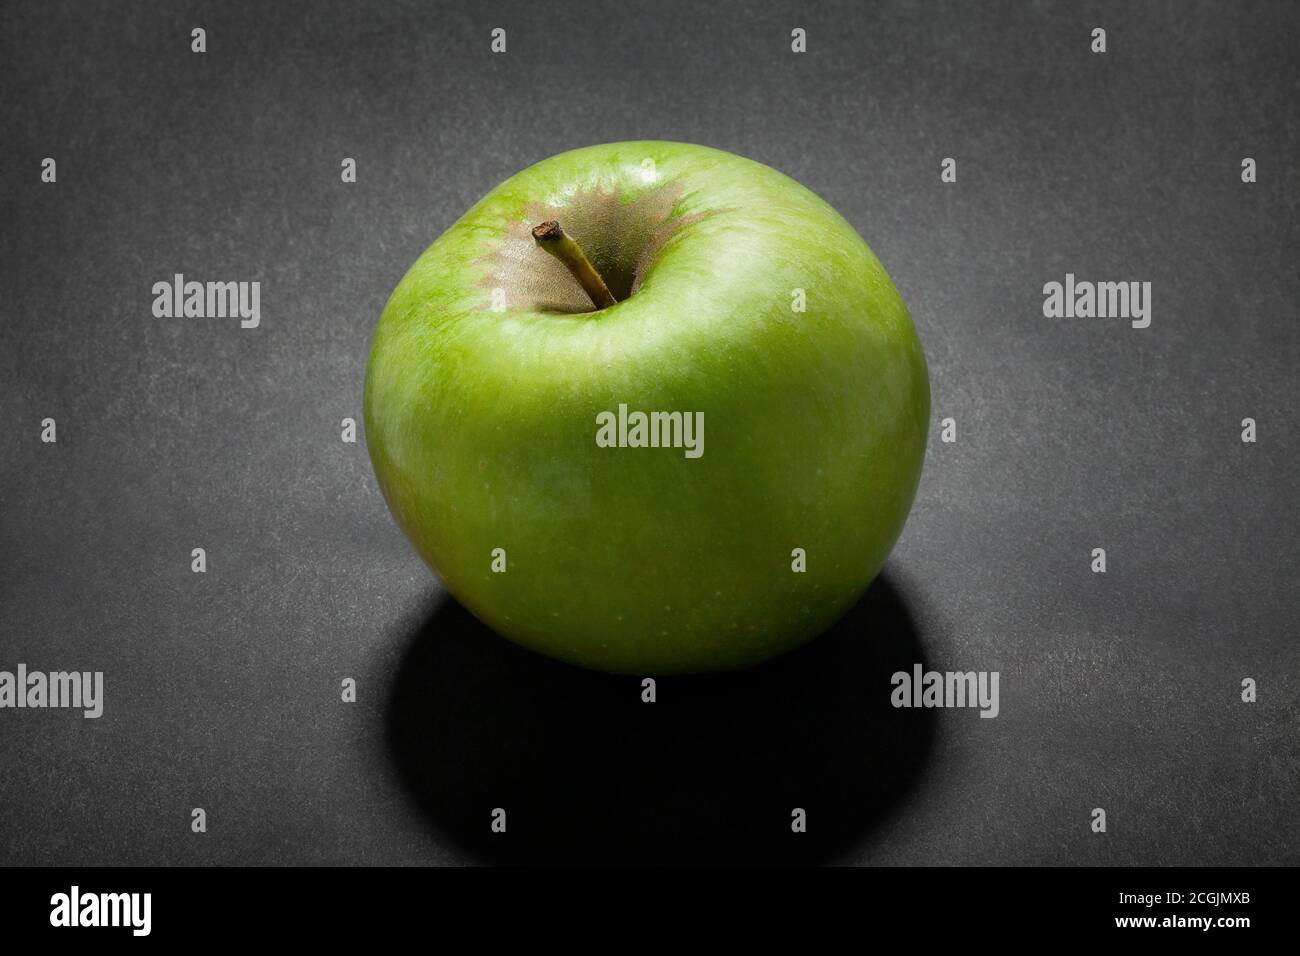 Oma smith Apfel auf schwarzem Hintergrund Stockfoto